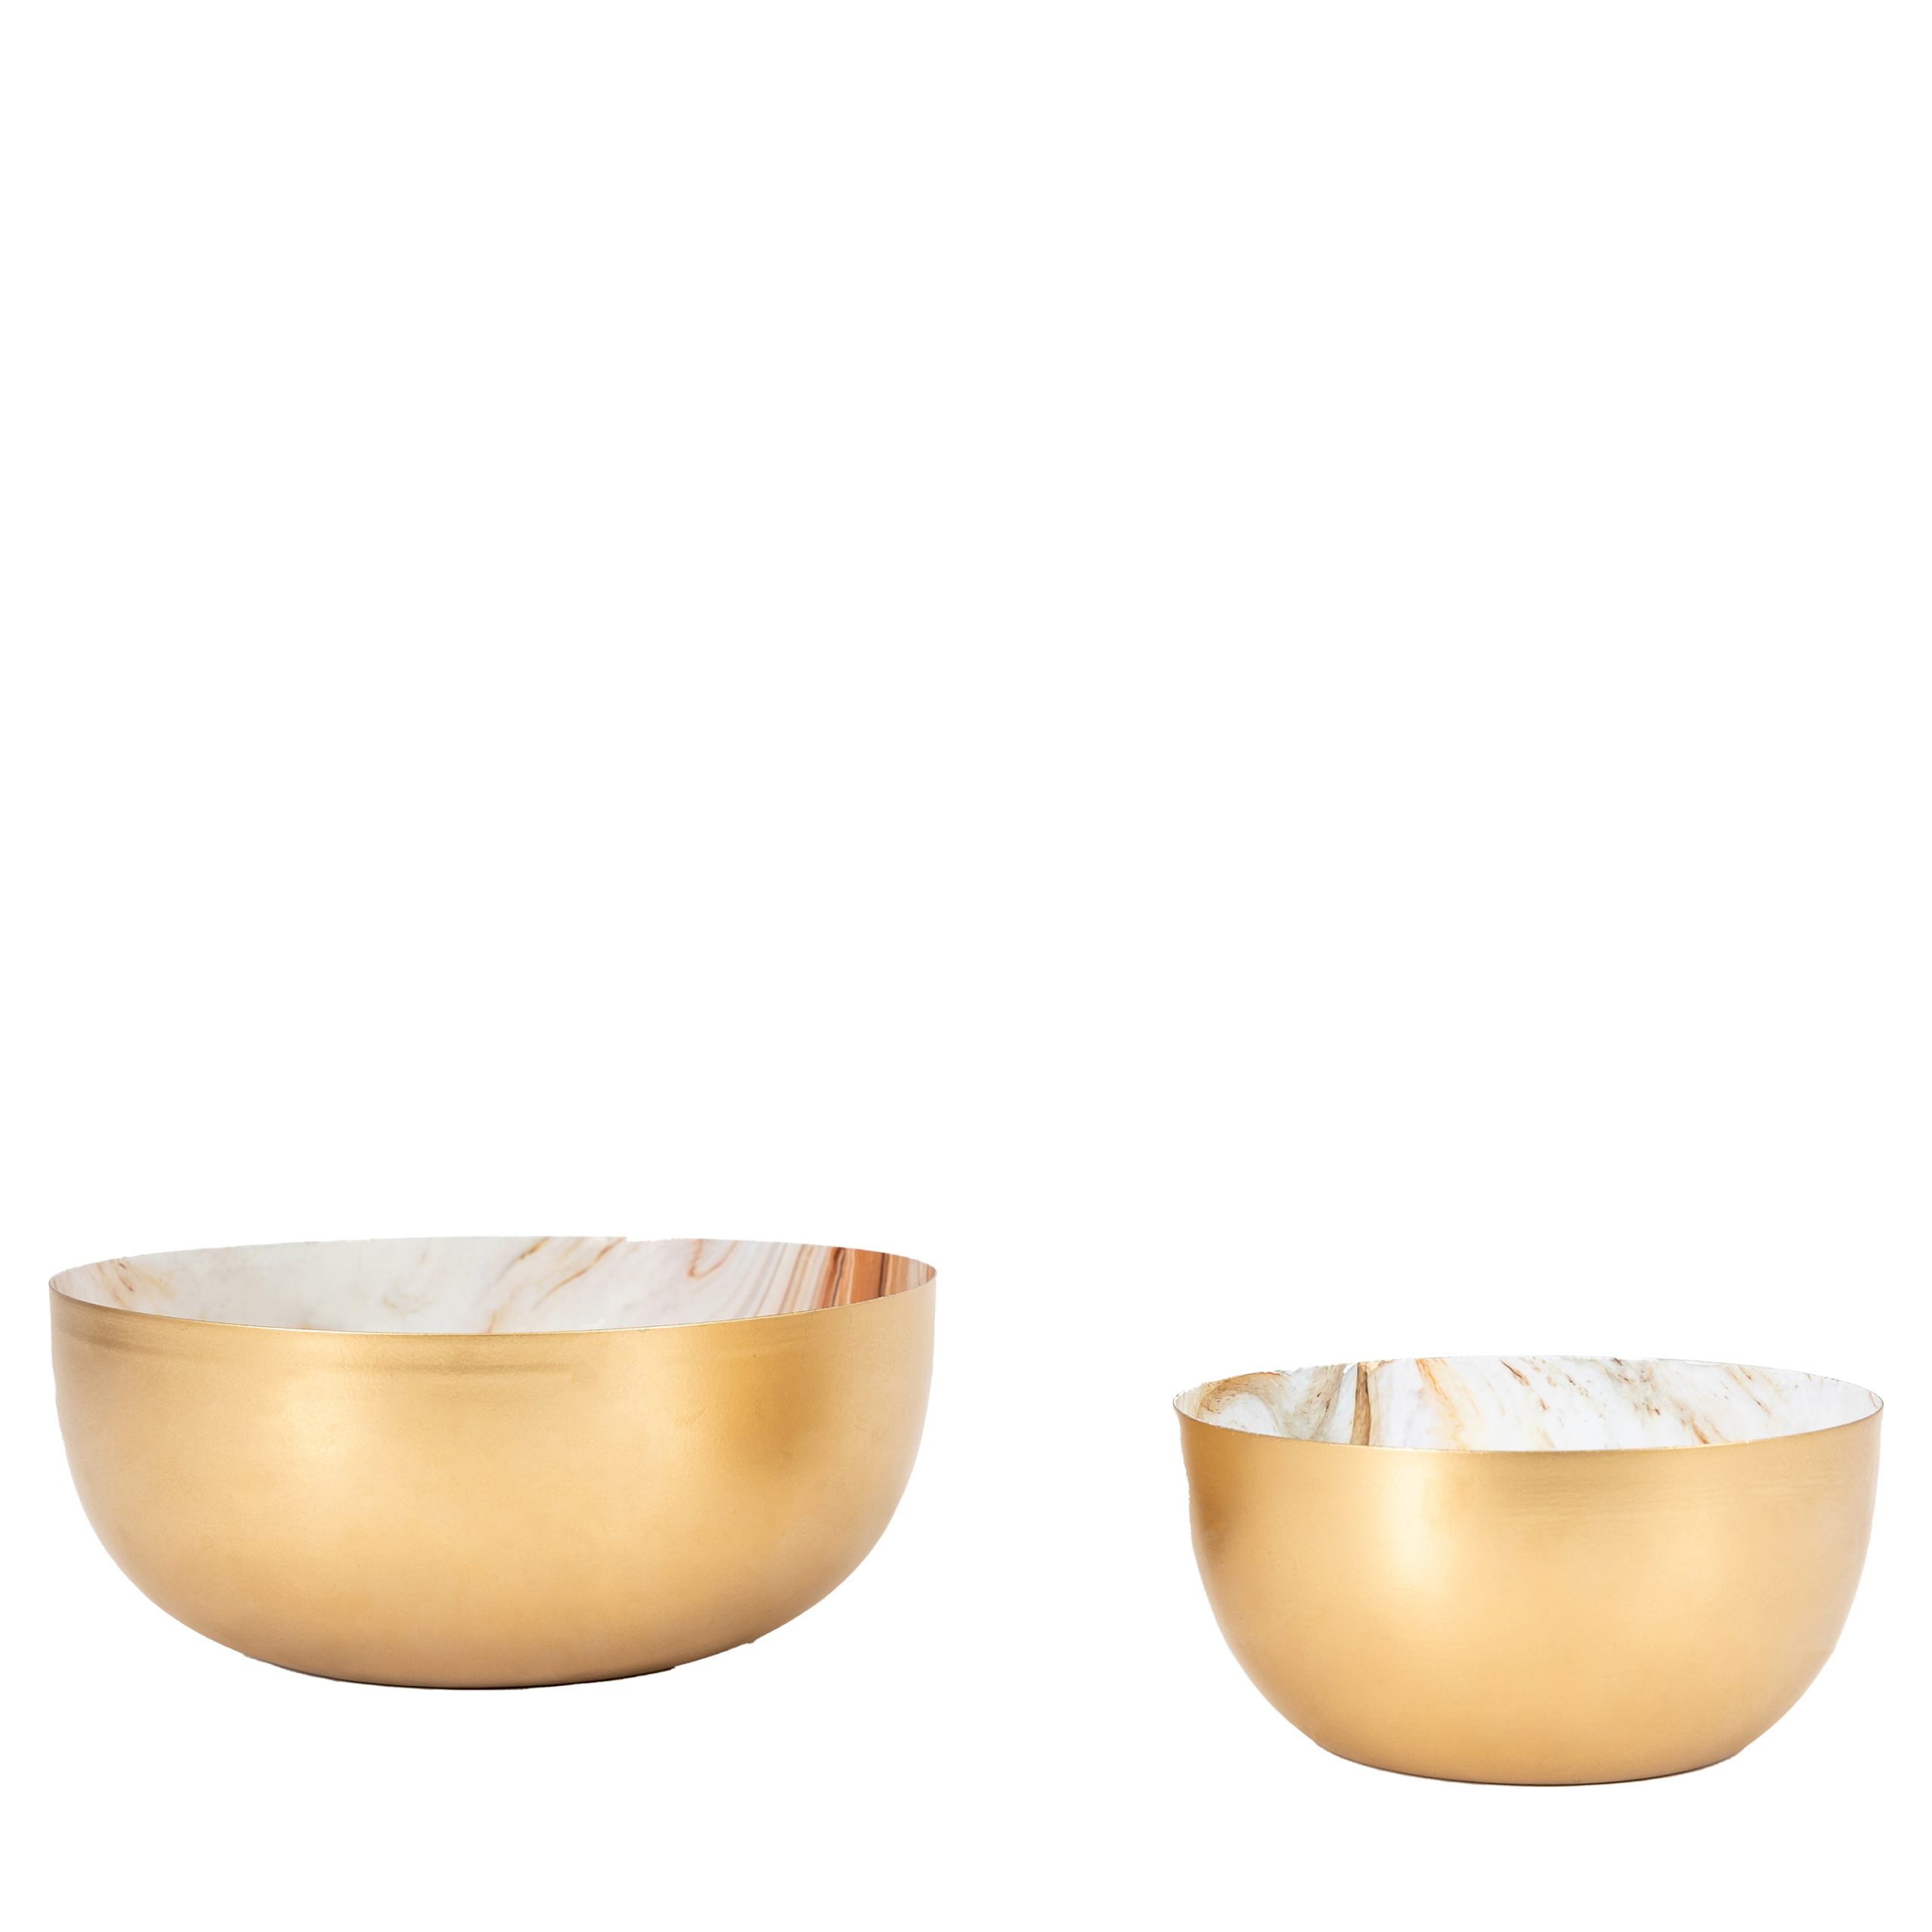 Gallery Direct Sahara Marbled Bowls (Set of 2)